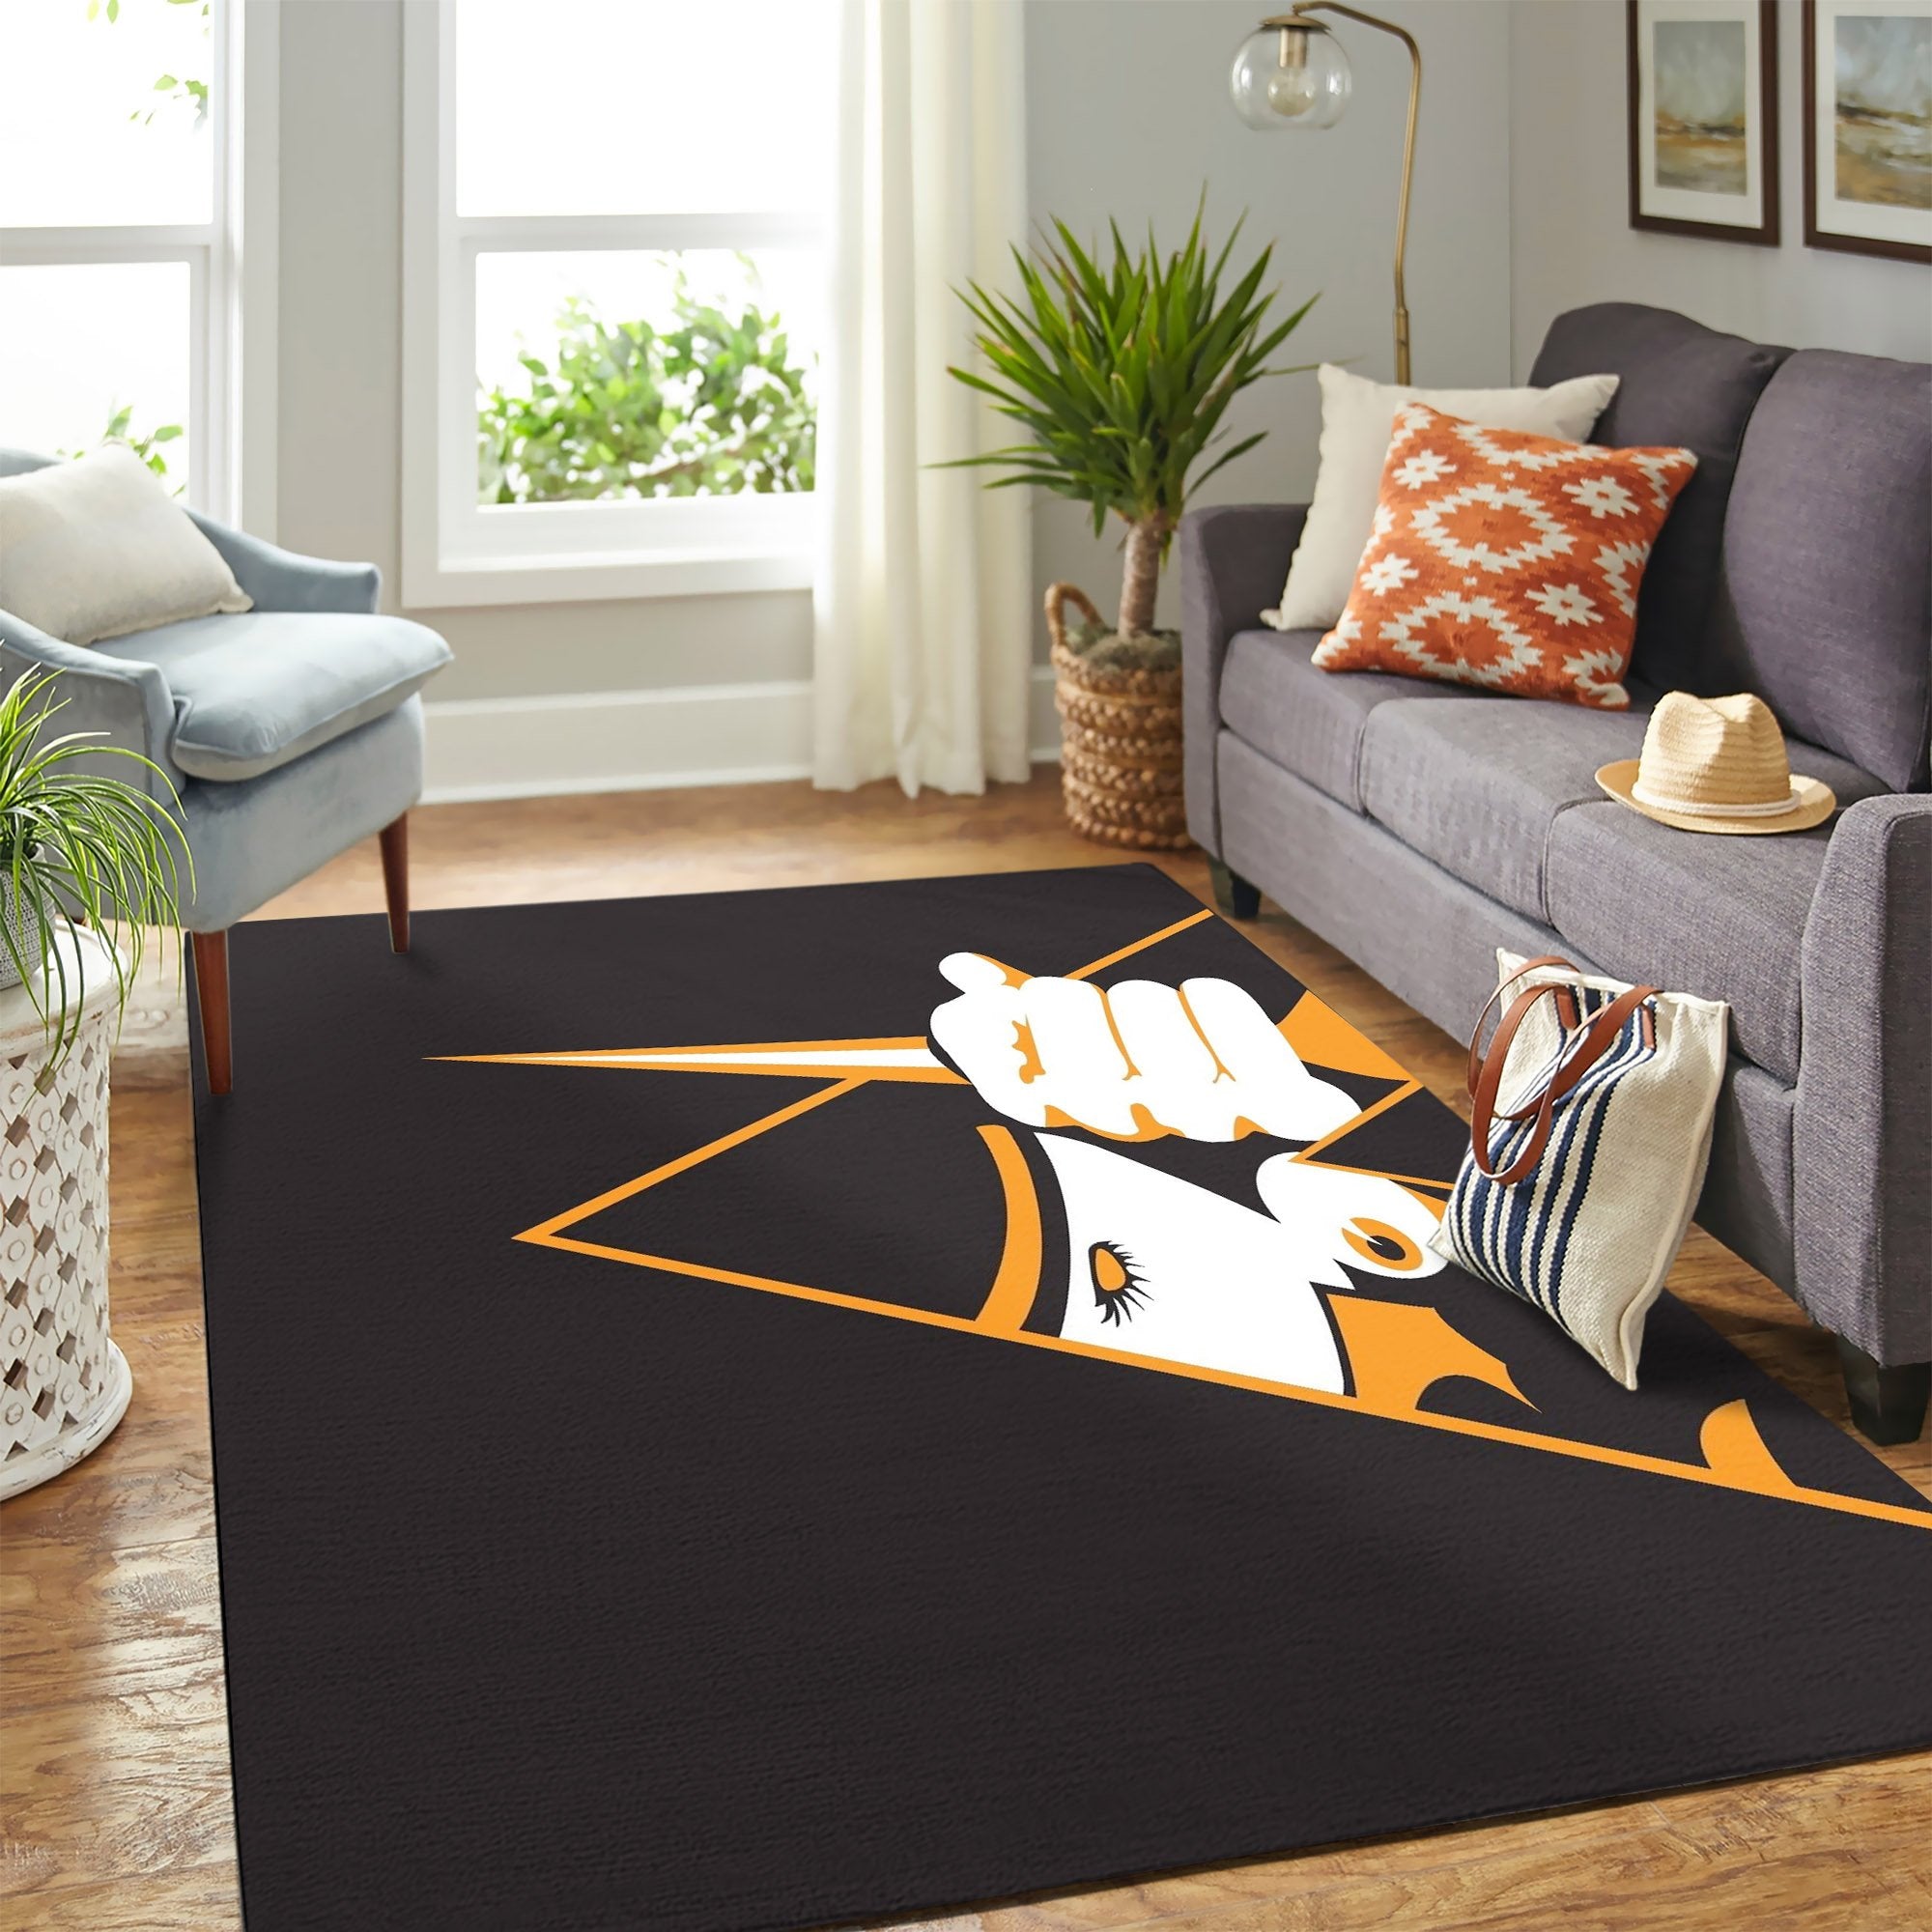 A Clockwork Orange Carpet